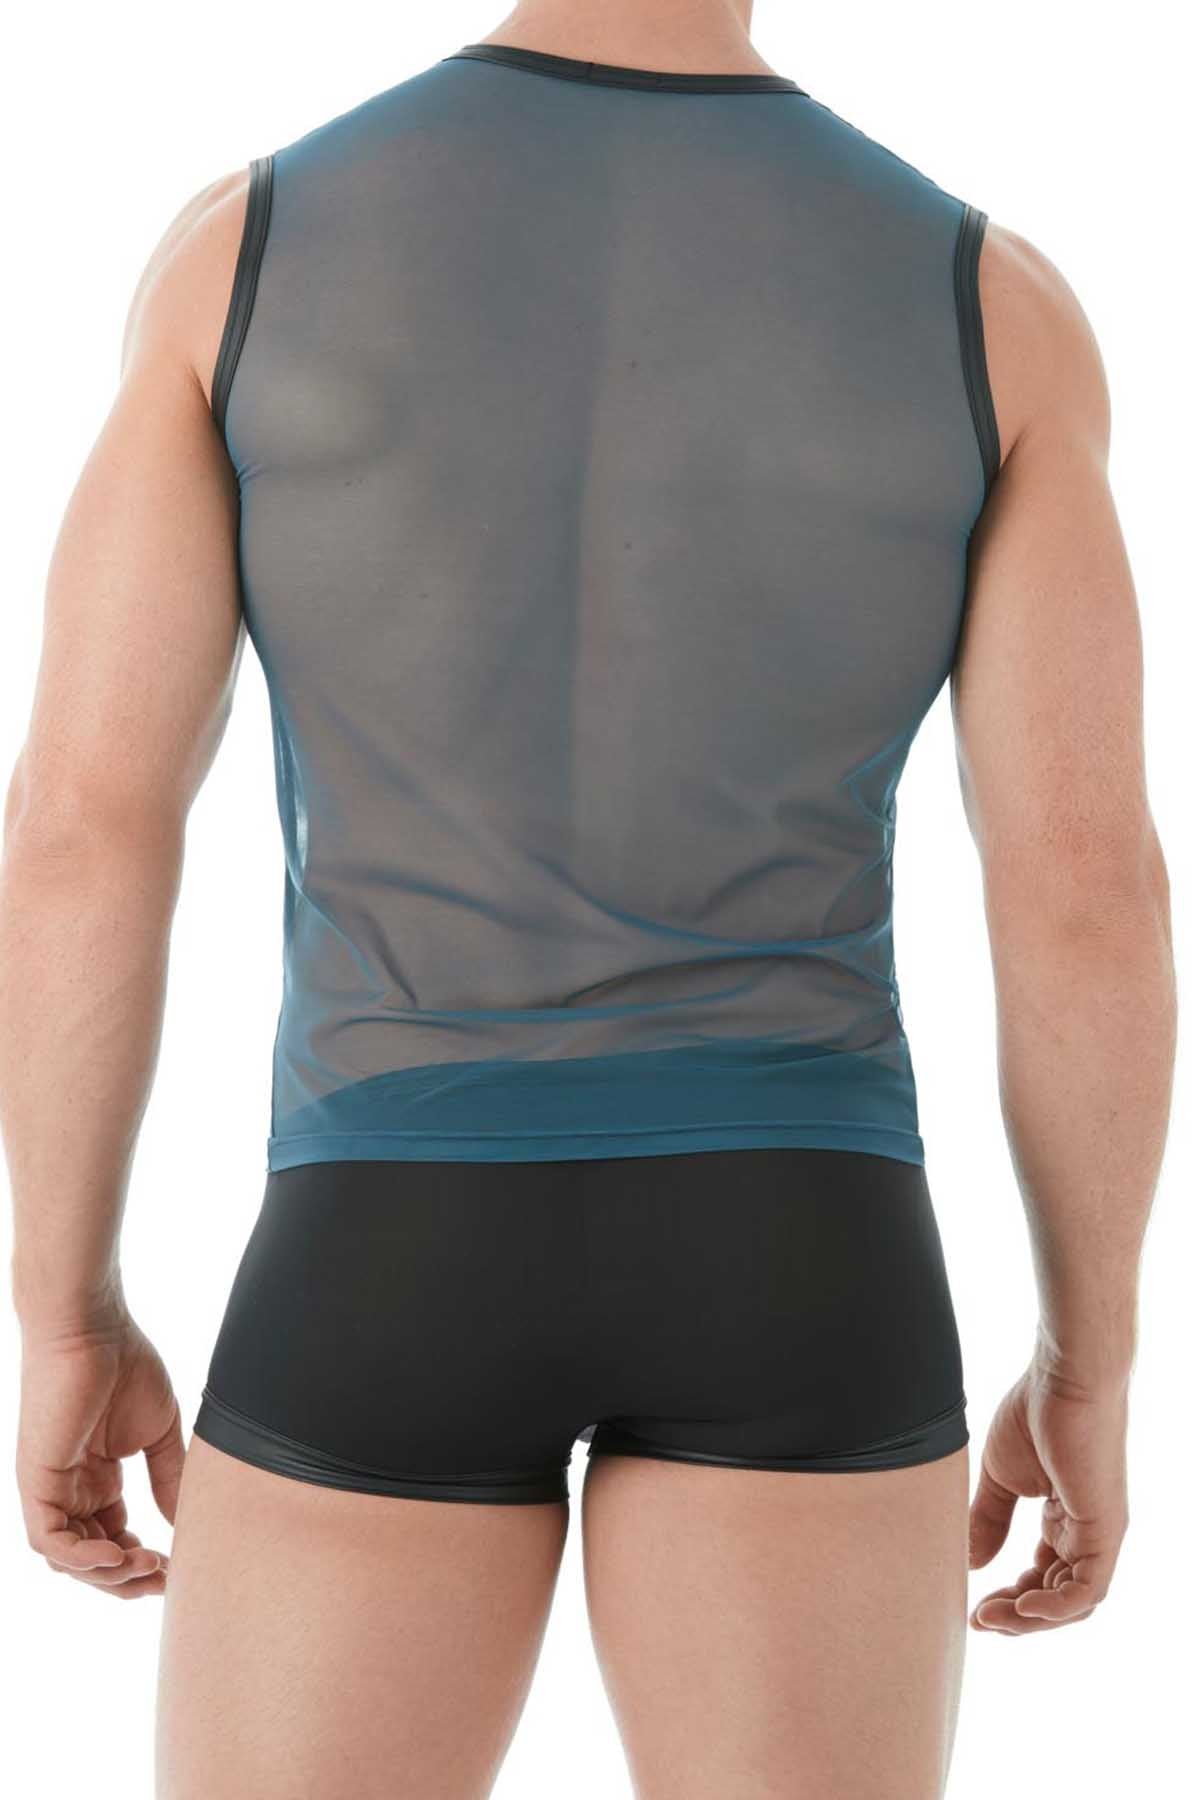 Gregg Homme Blue Break-In Muscle Mesh Shirt